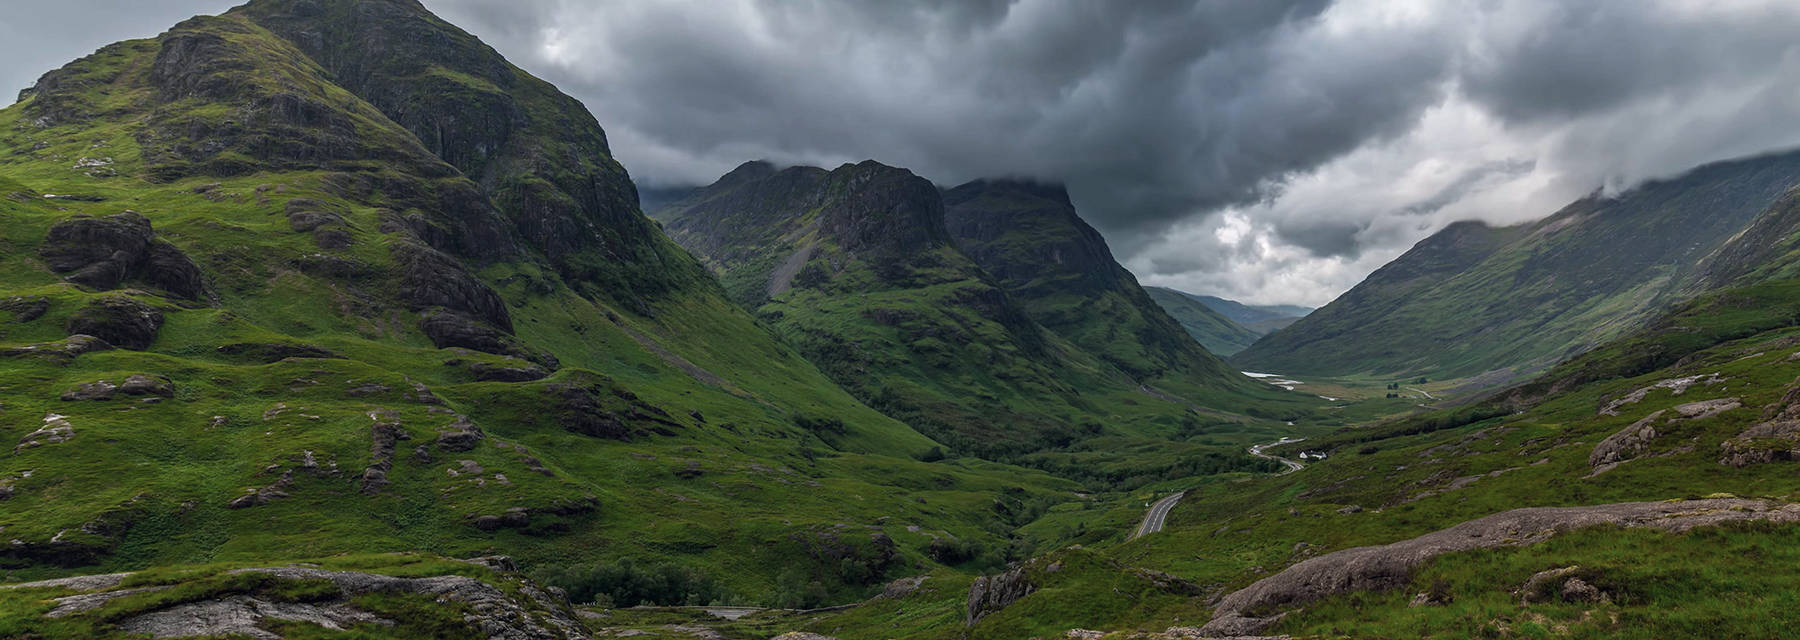 quiet places to visit scotland